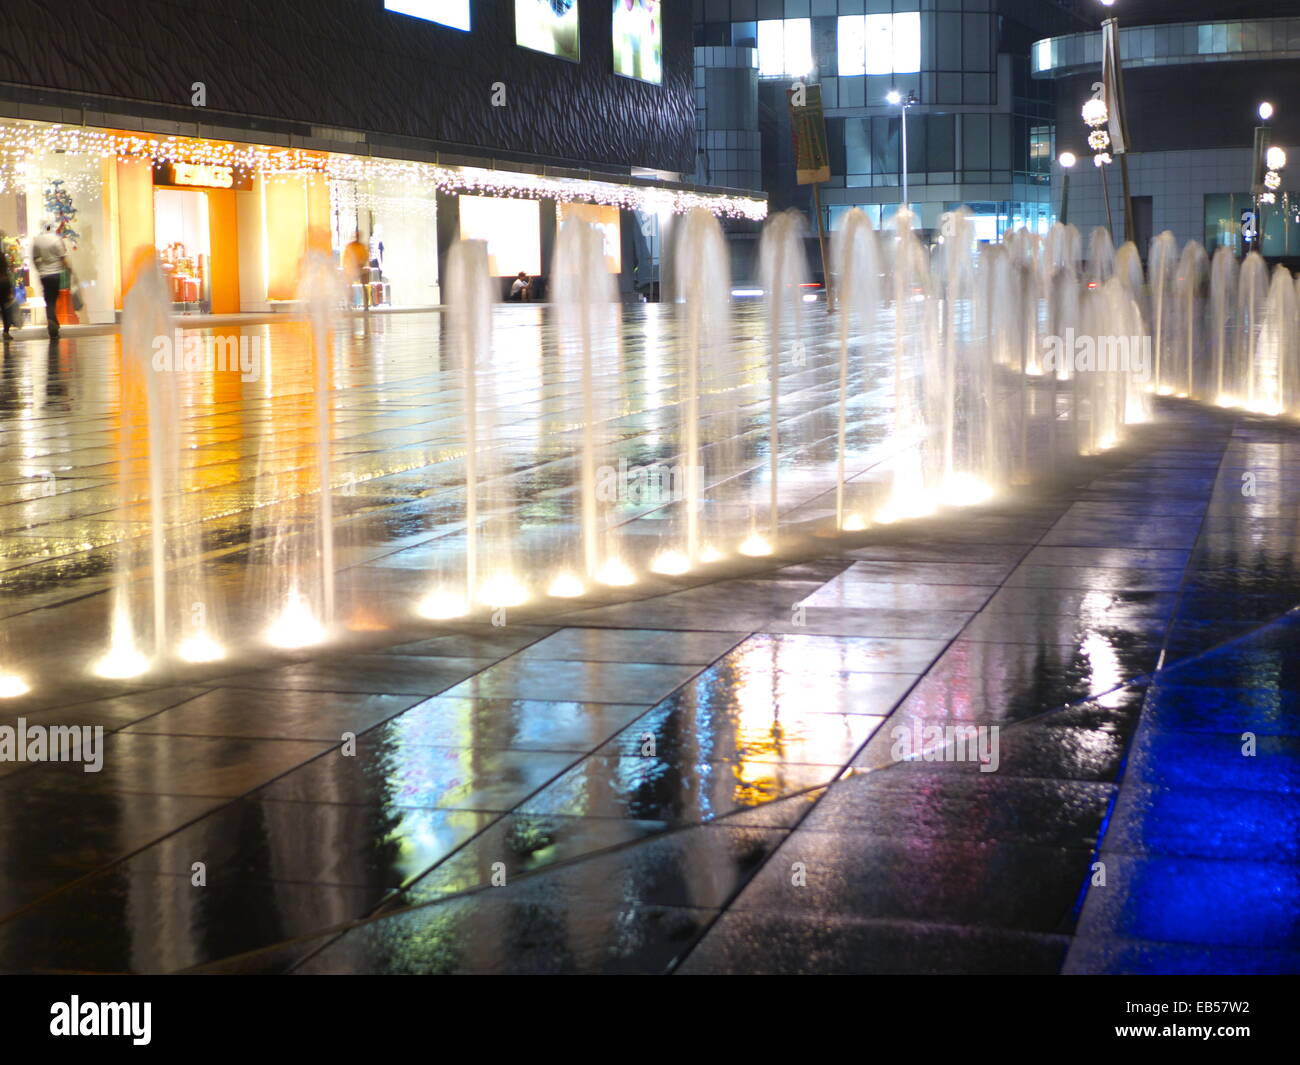 South East Asia Singapore Vivo City shopping mall fountain at night Stock Photo